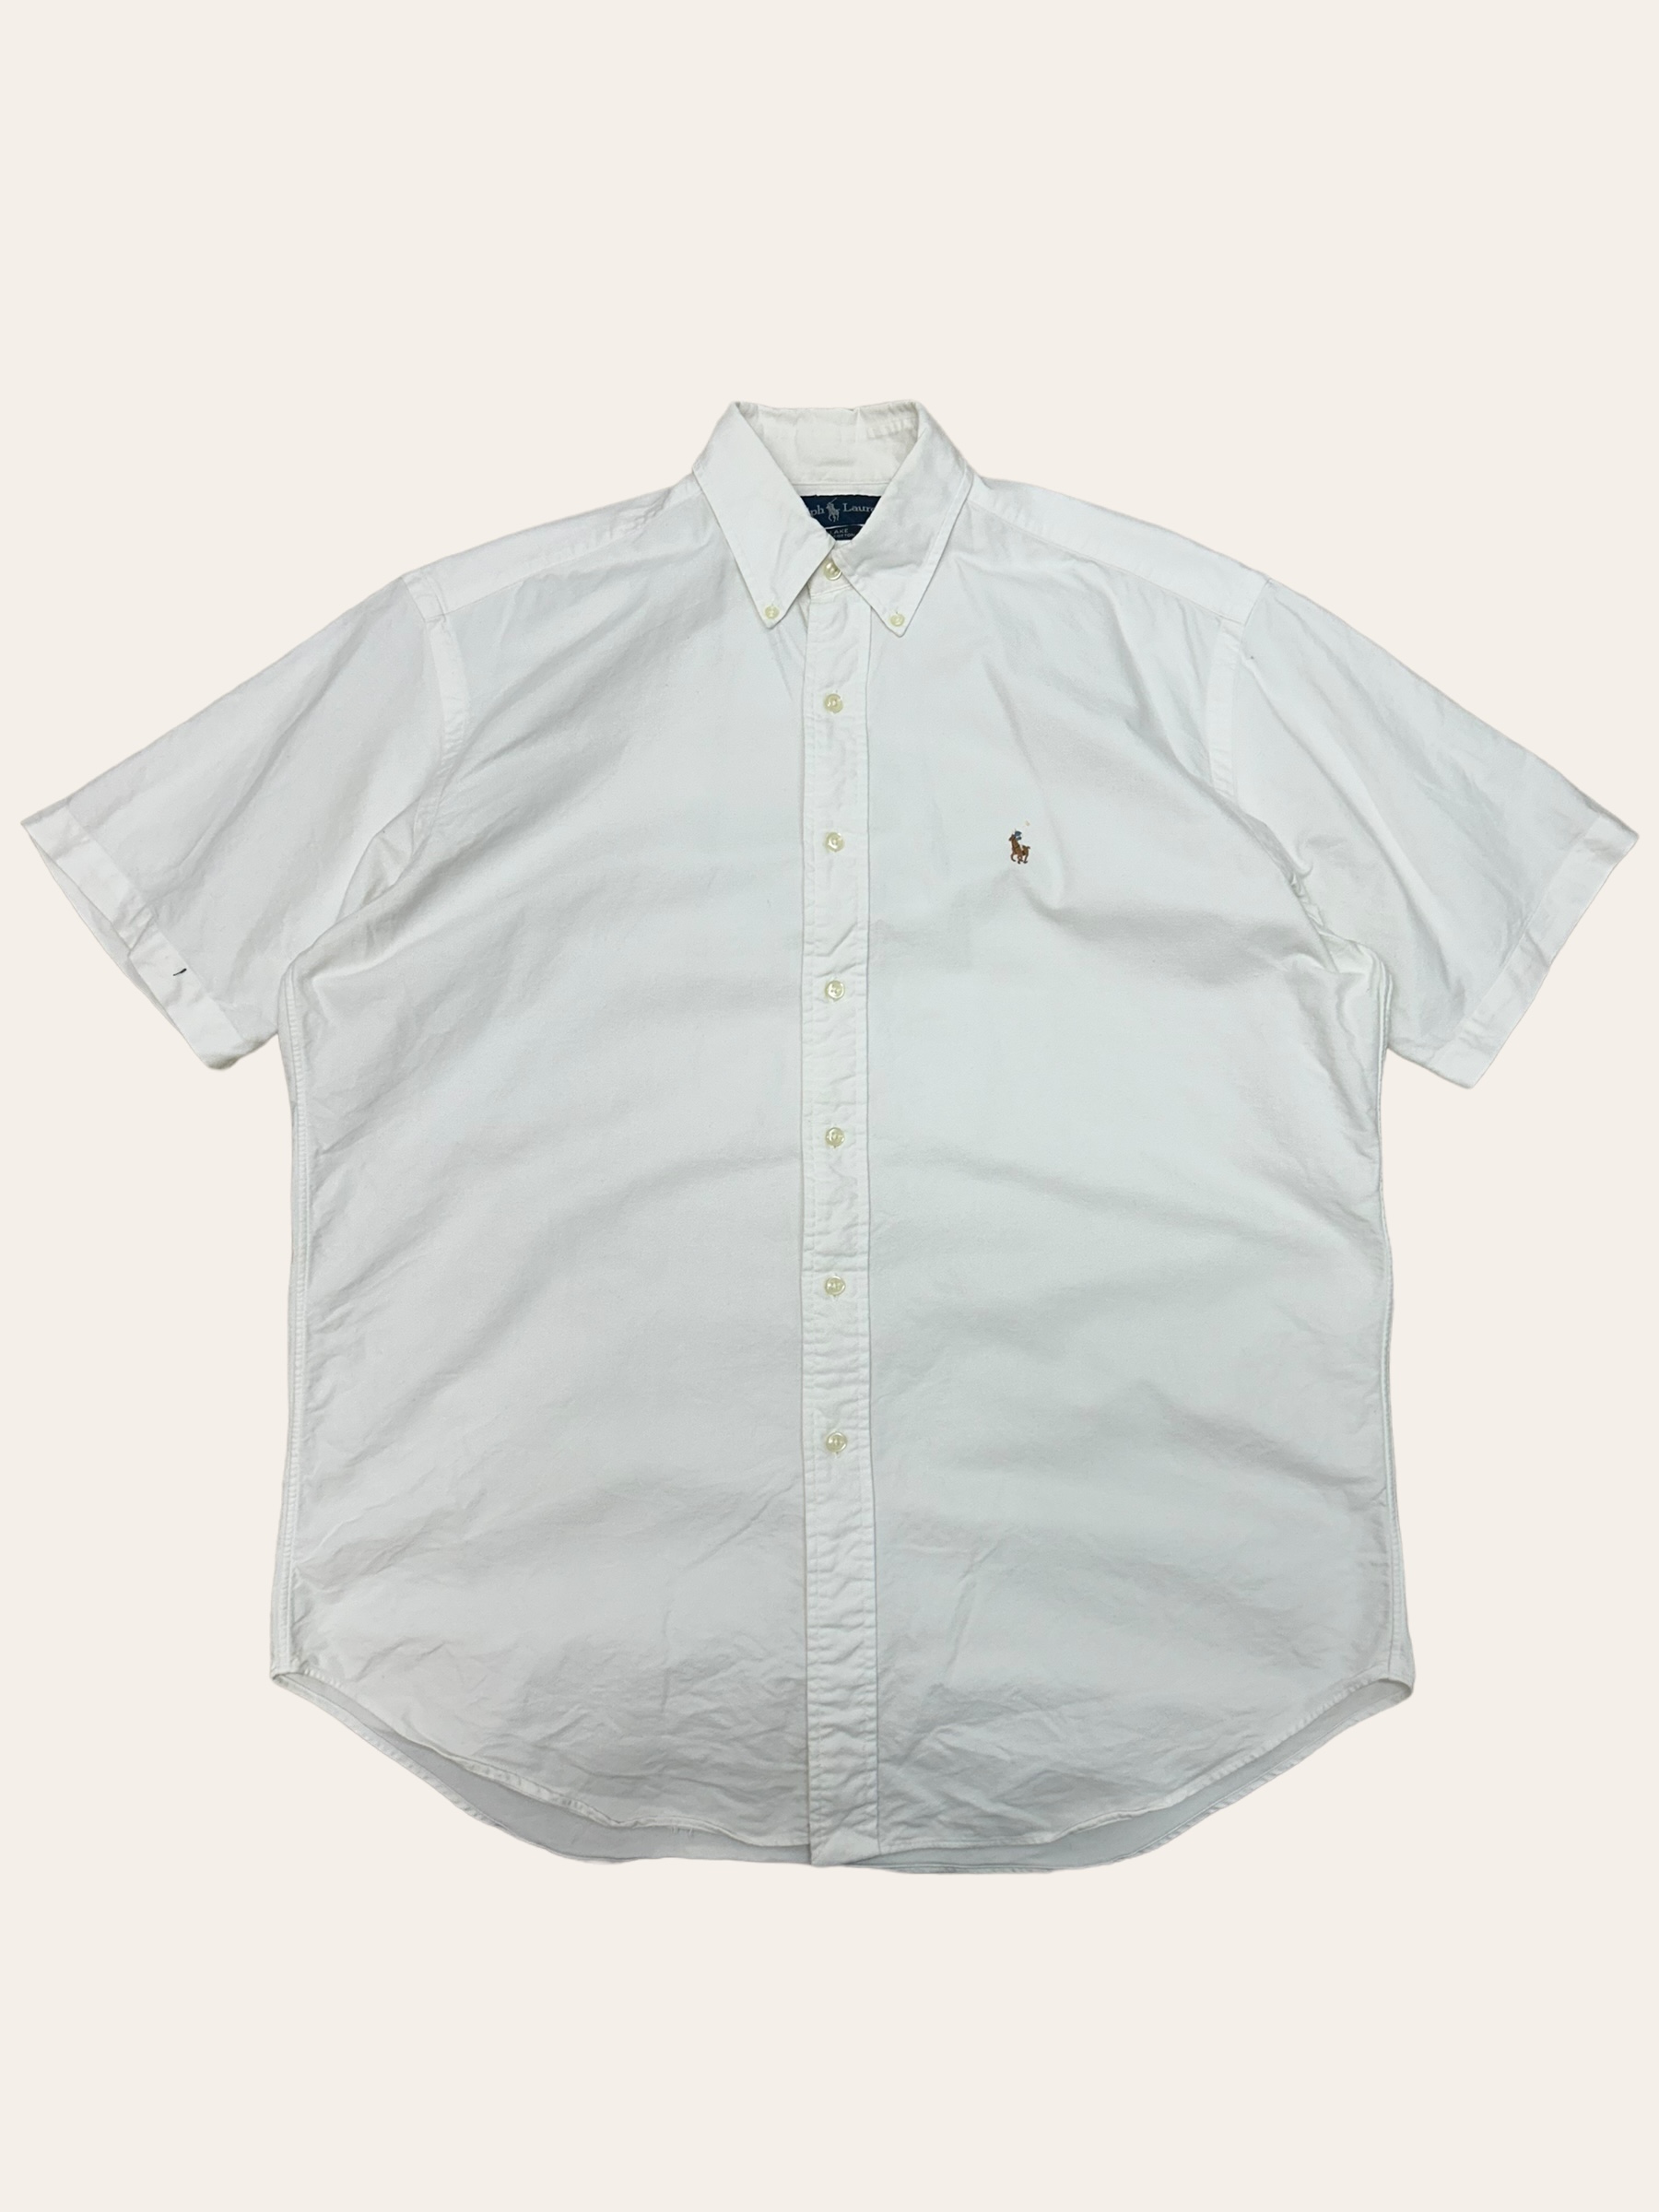 Polo ralph lauren white short sleeve oxford shirt M